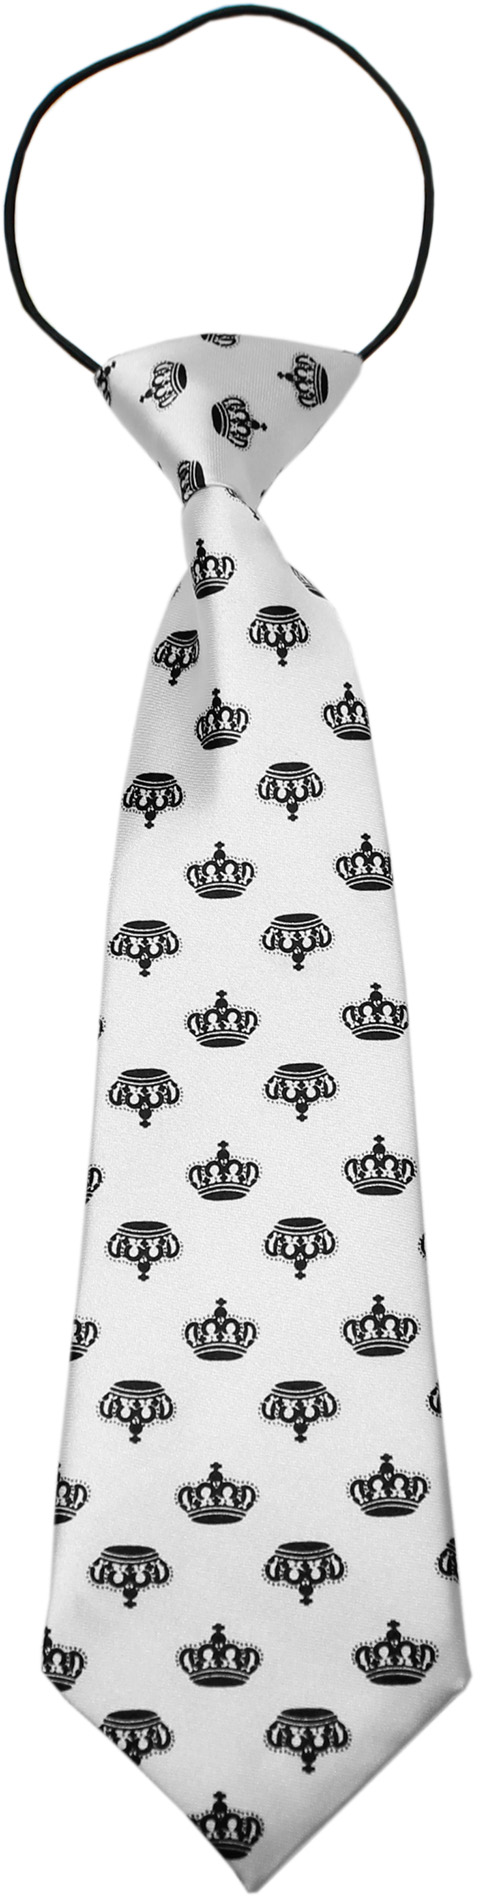 Big Dog Neck Tie Crowns